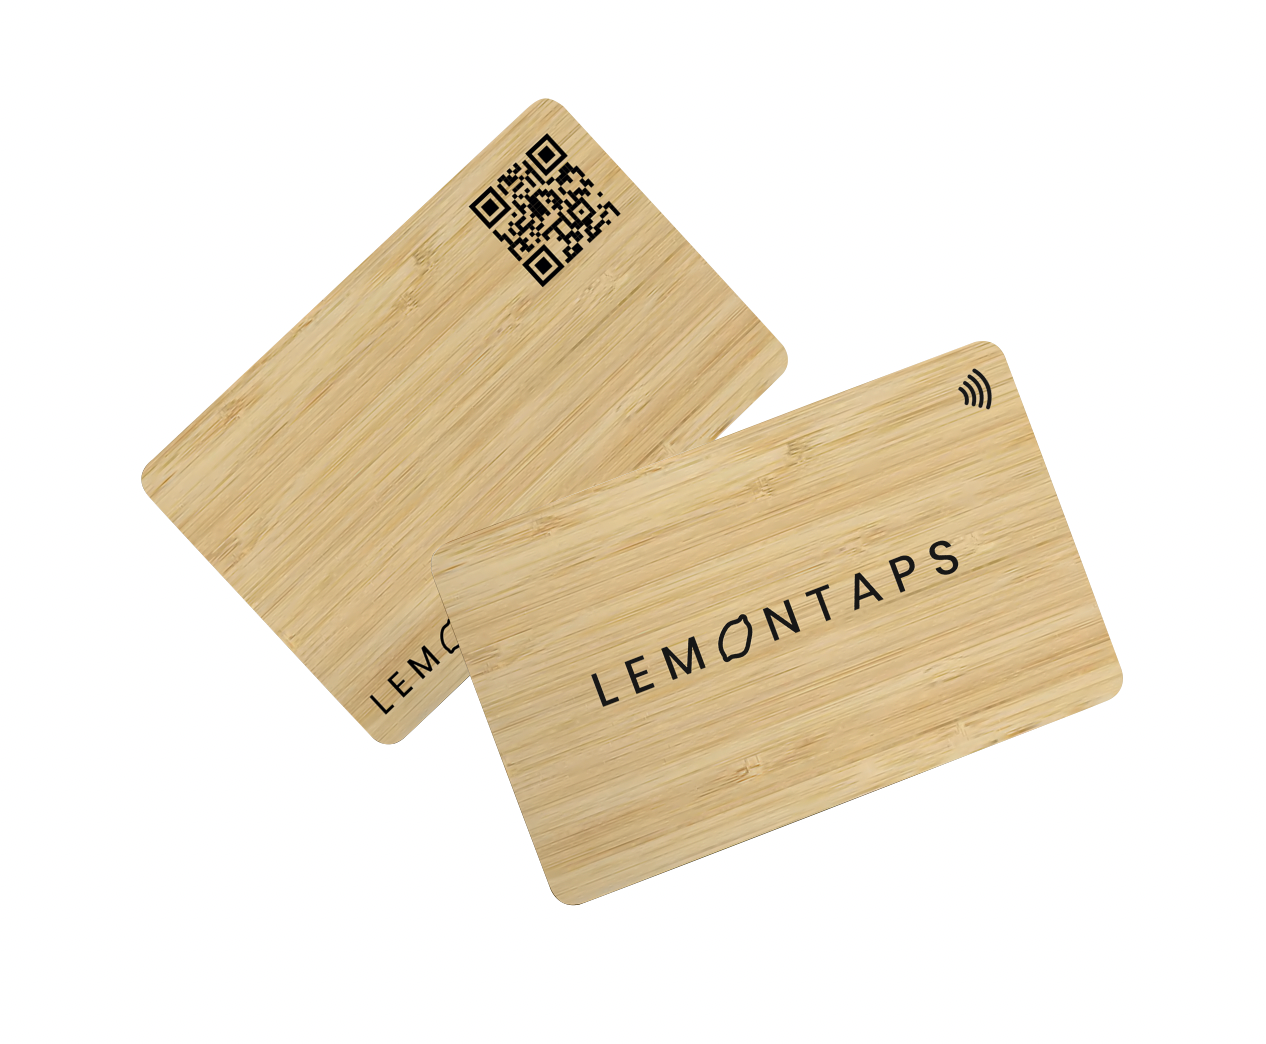 Lemontaps NFC wooden card